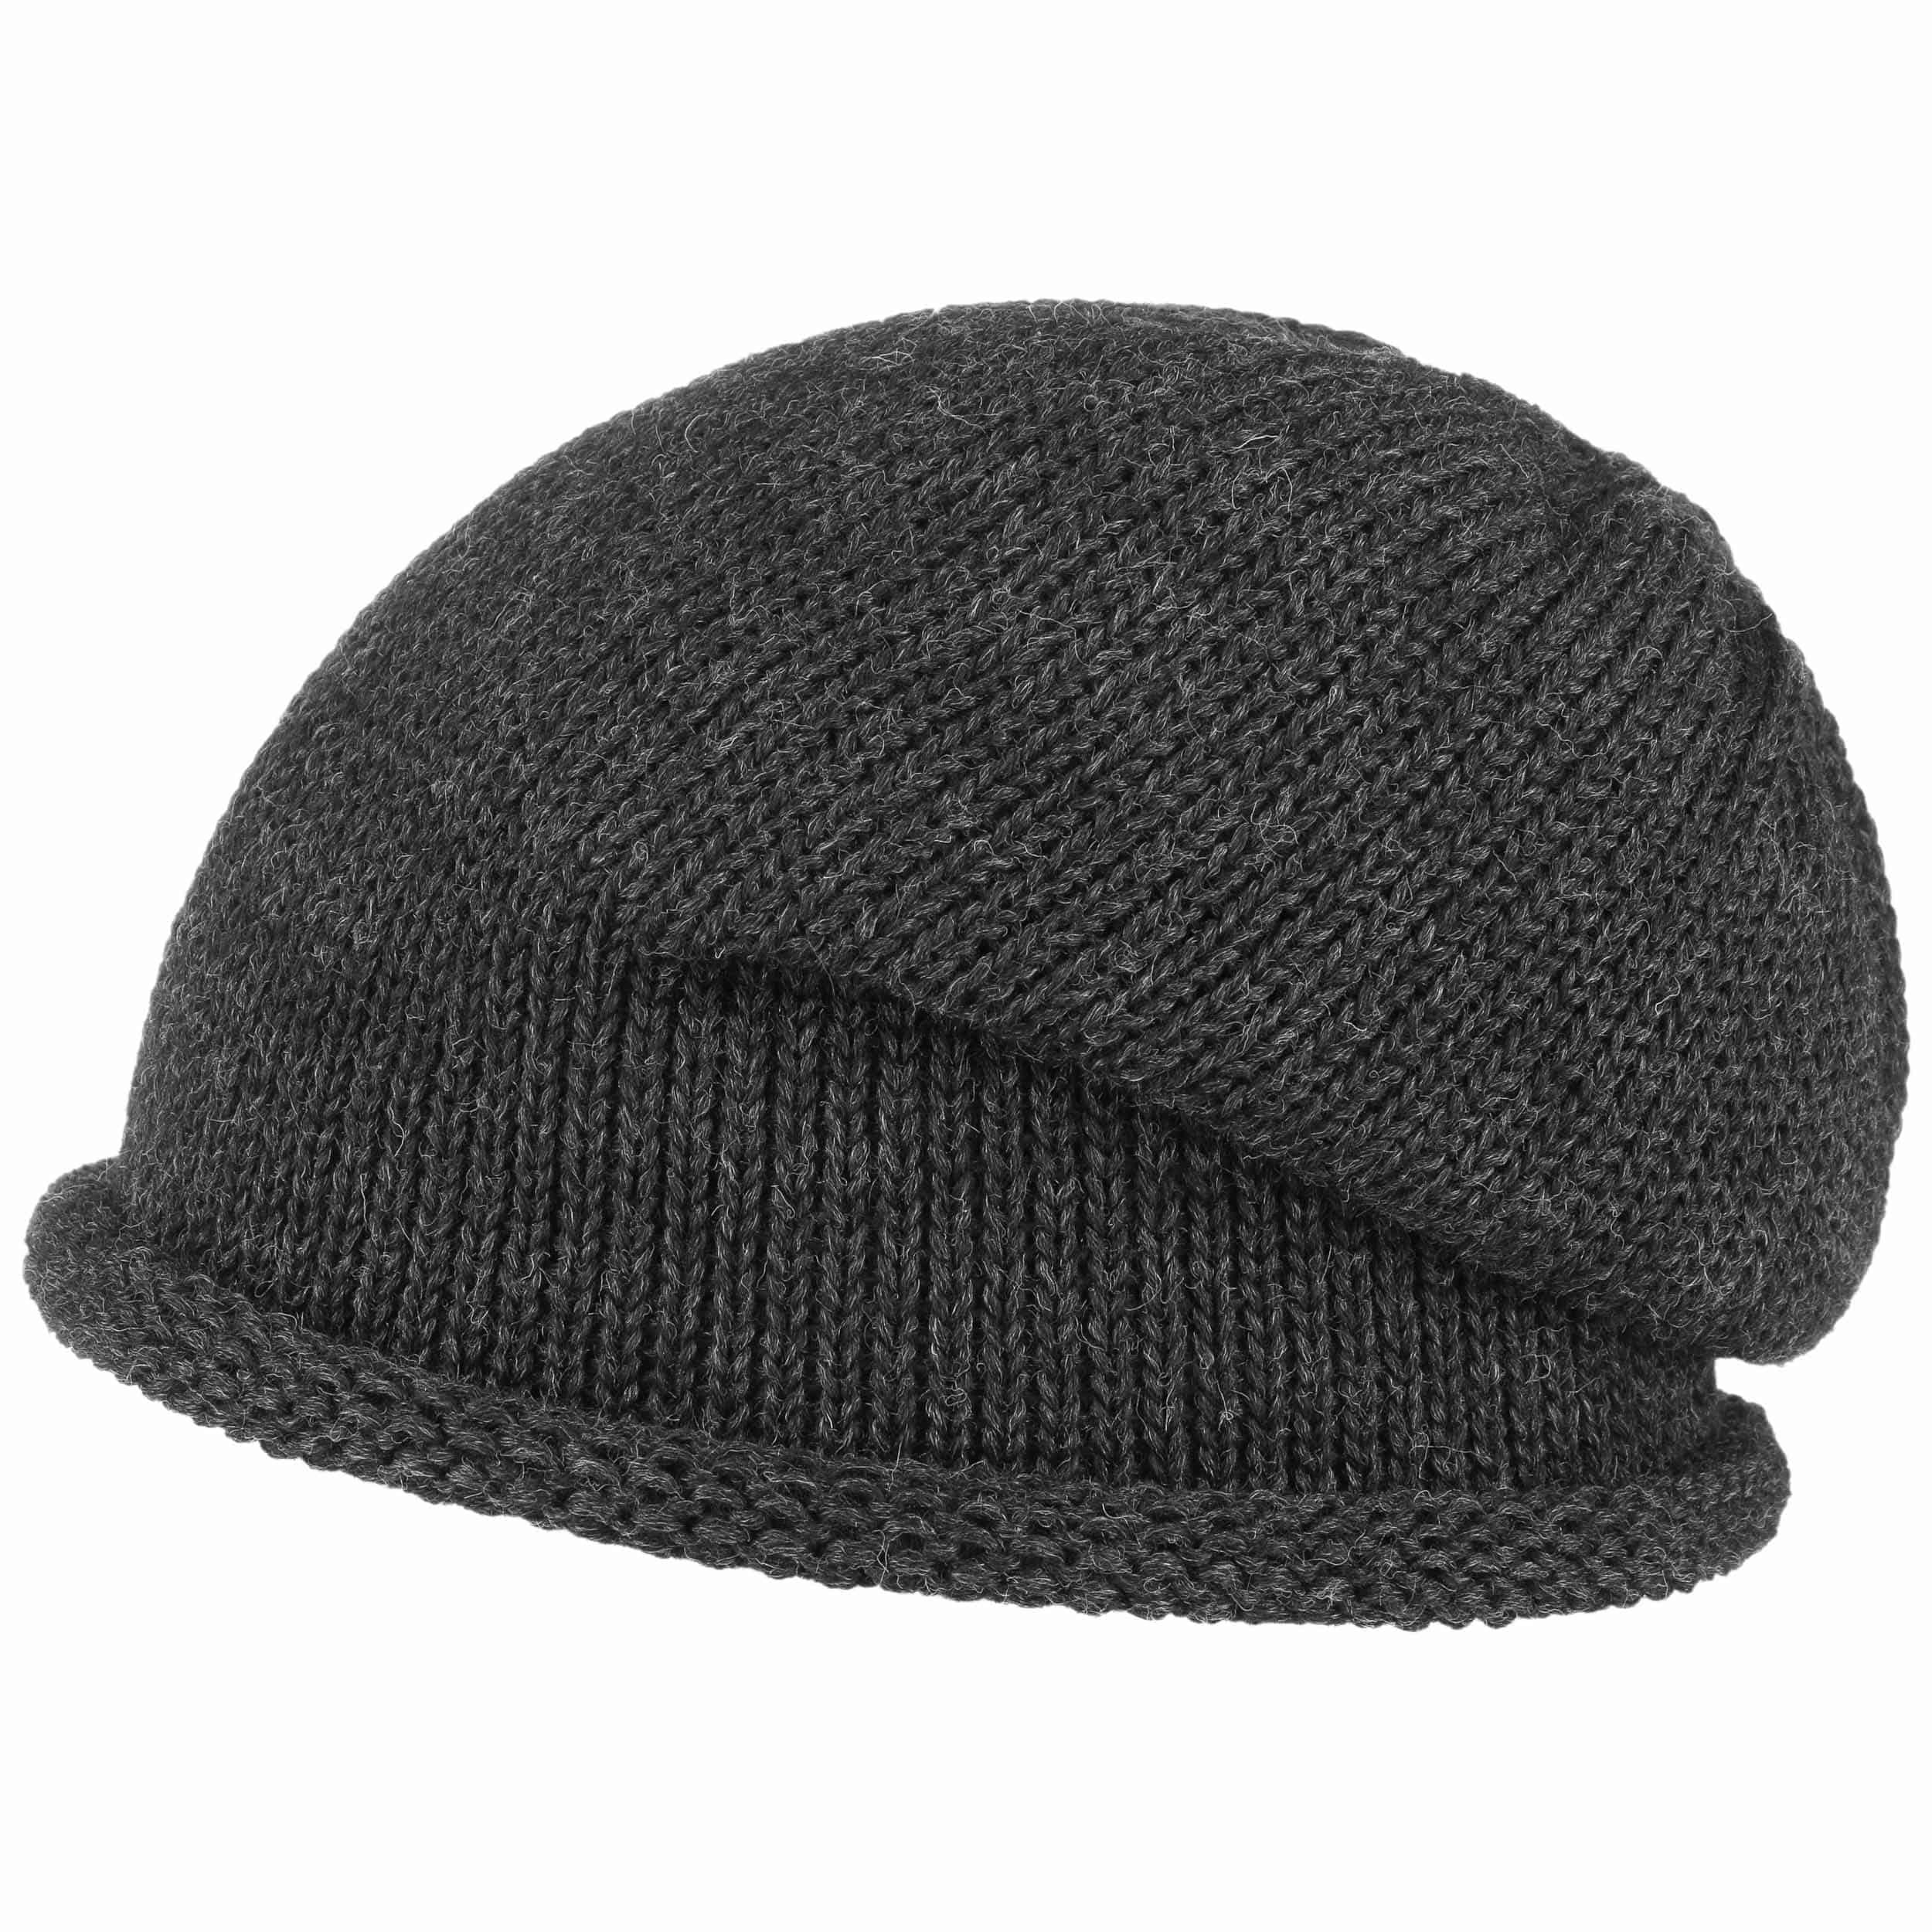 Rolled Edge Knit Hat by Lierys, EUR 24,95 --> Hats, caps & beanies shop ...